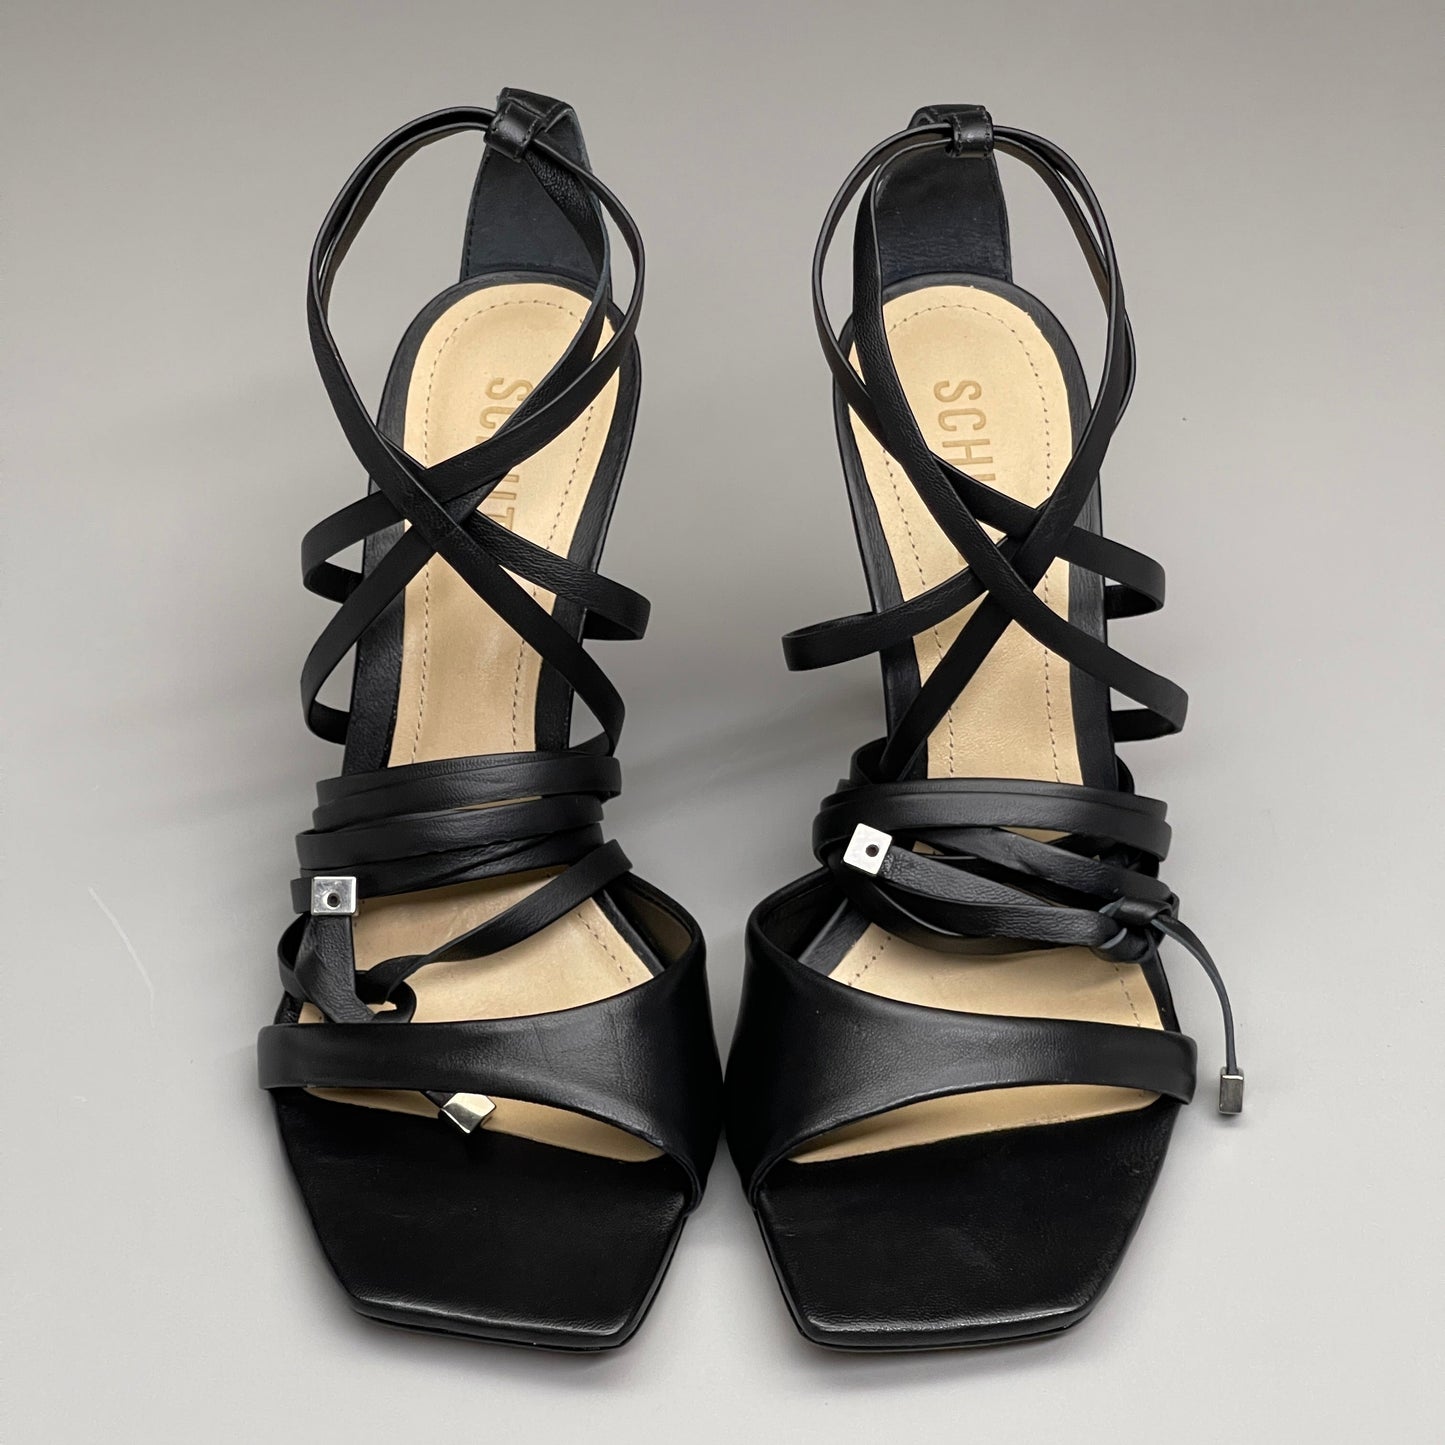 SCHUTZ Bryce Ankle Tie Women's Leather High Heel Strappy Sandal Black Sz 5.5B (New)